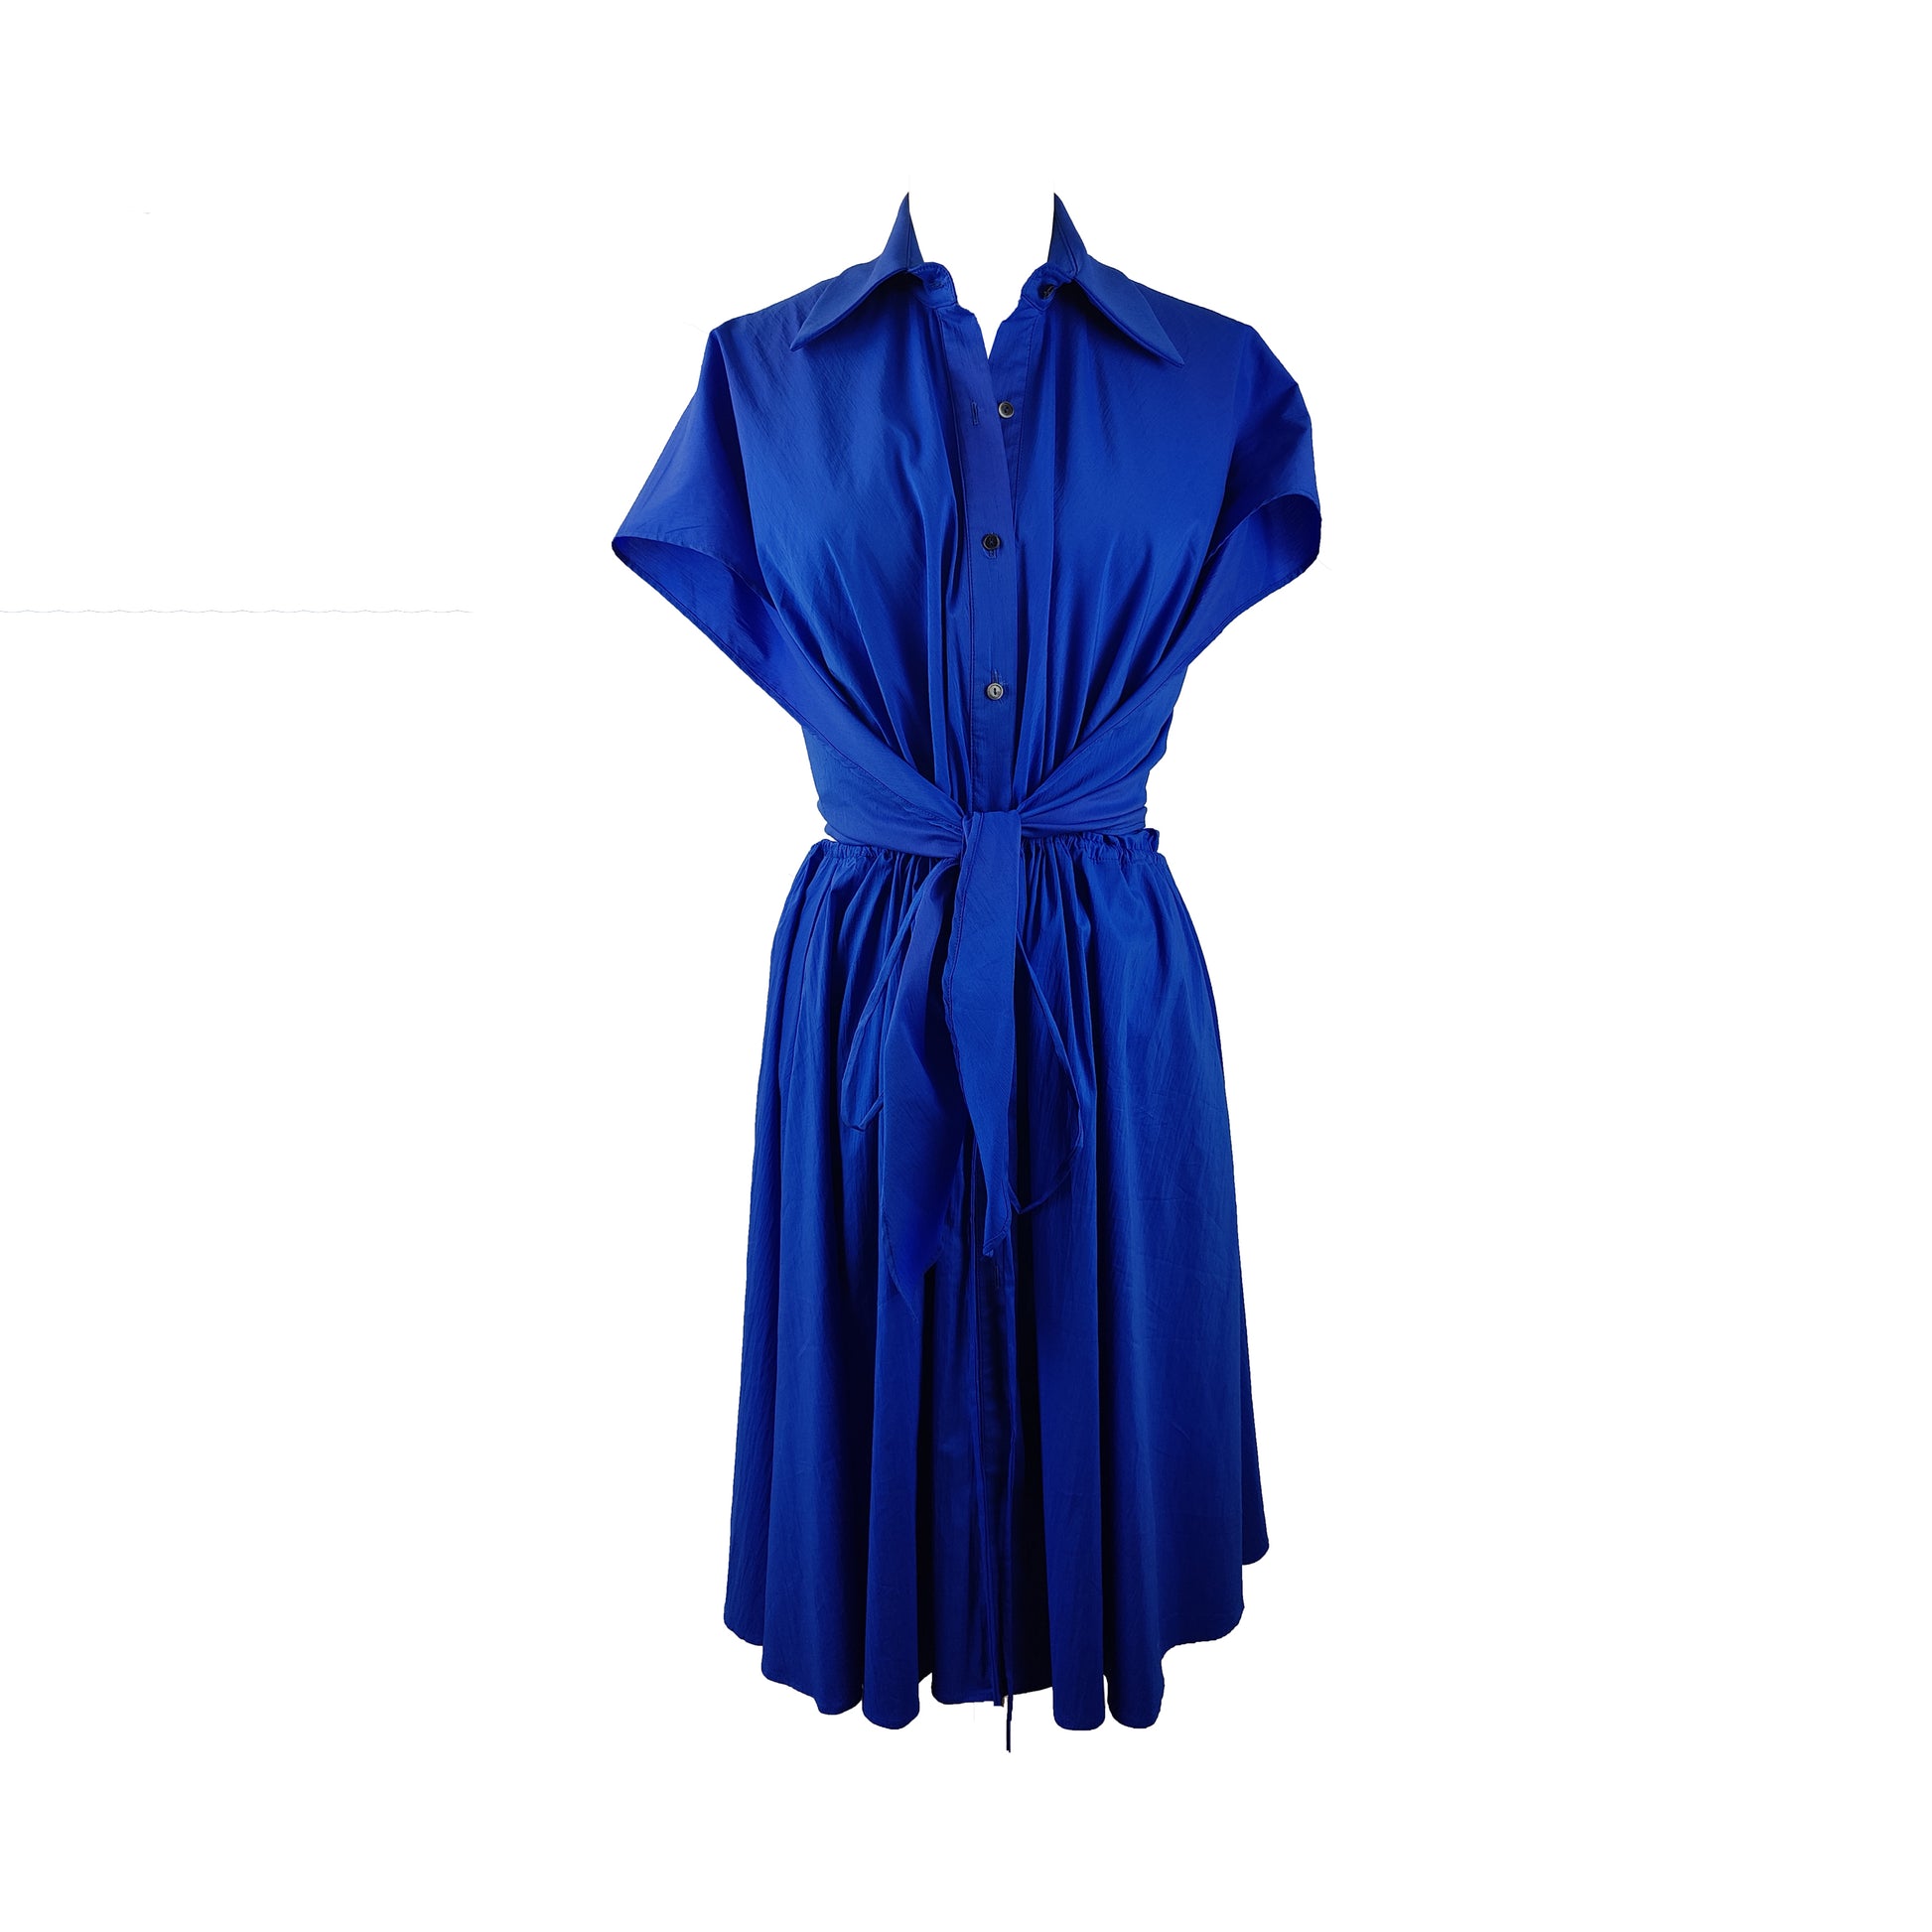 Cupro cobalt blue dress with button detailing and adjustable waist